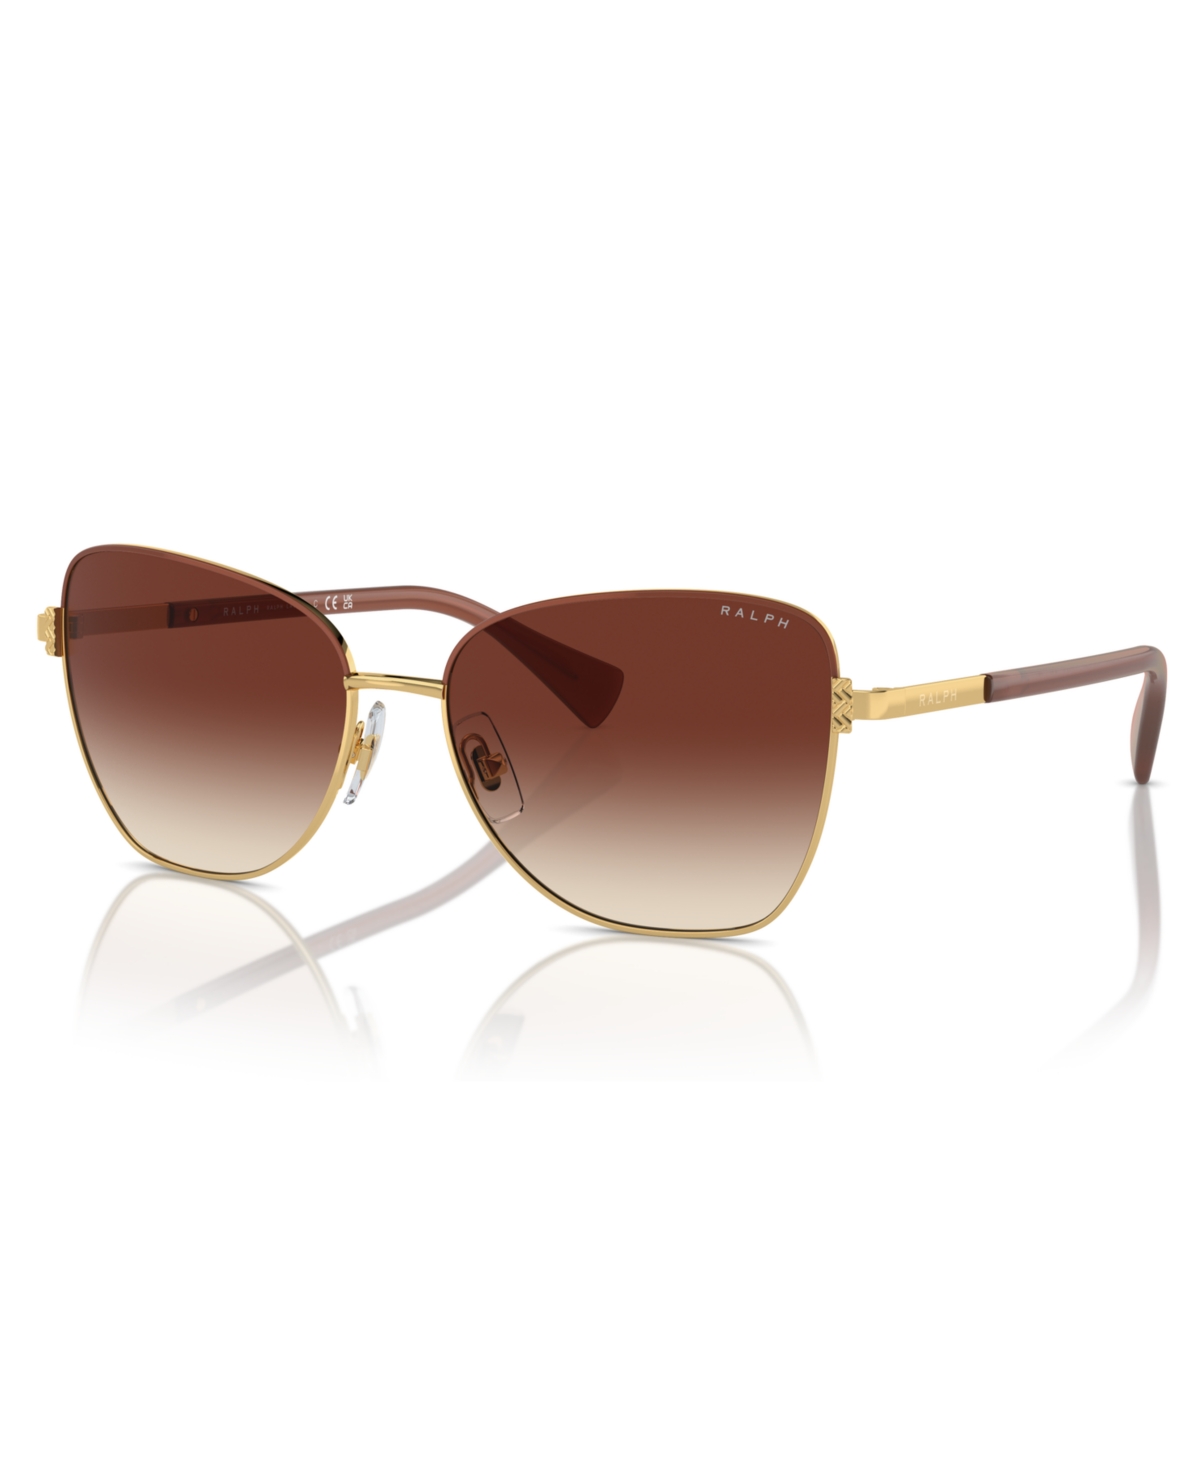 Women's Sunglasses, Ra4146 - Shiny Gold, Brown